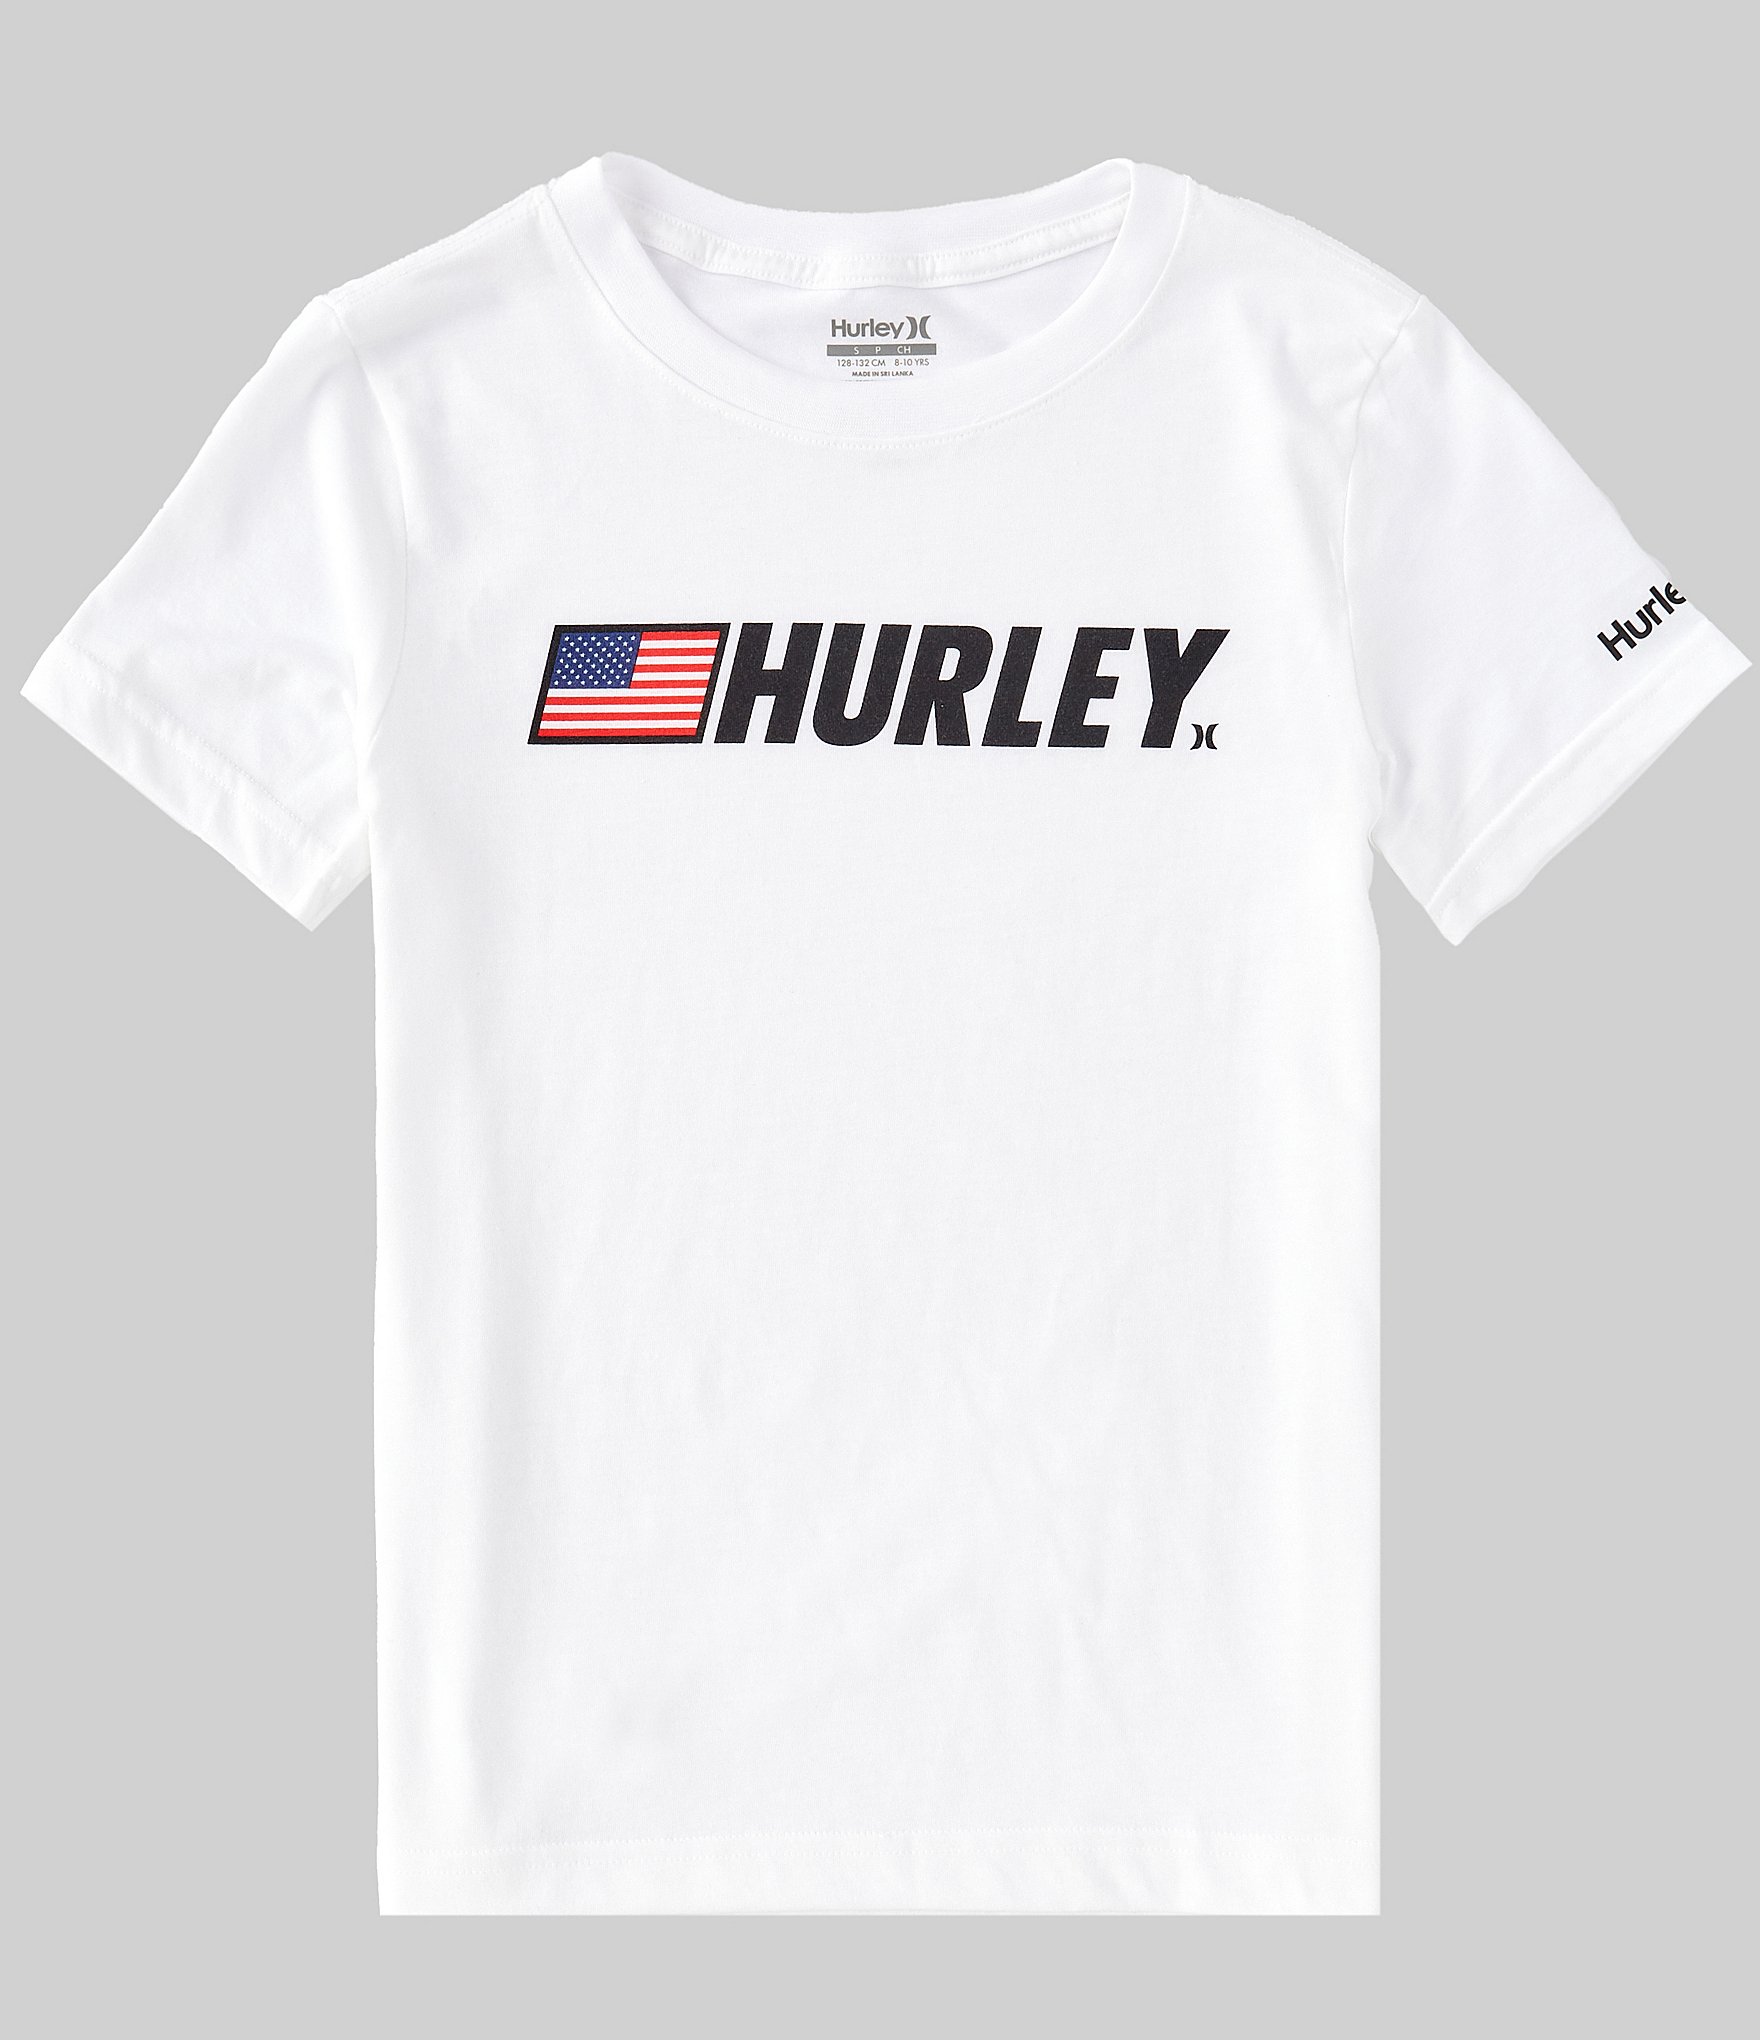 Tommy Hilfiger Big Boys 8-20 Short-Sleeve Classic V-Neck T-Shirt